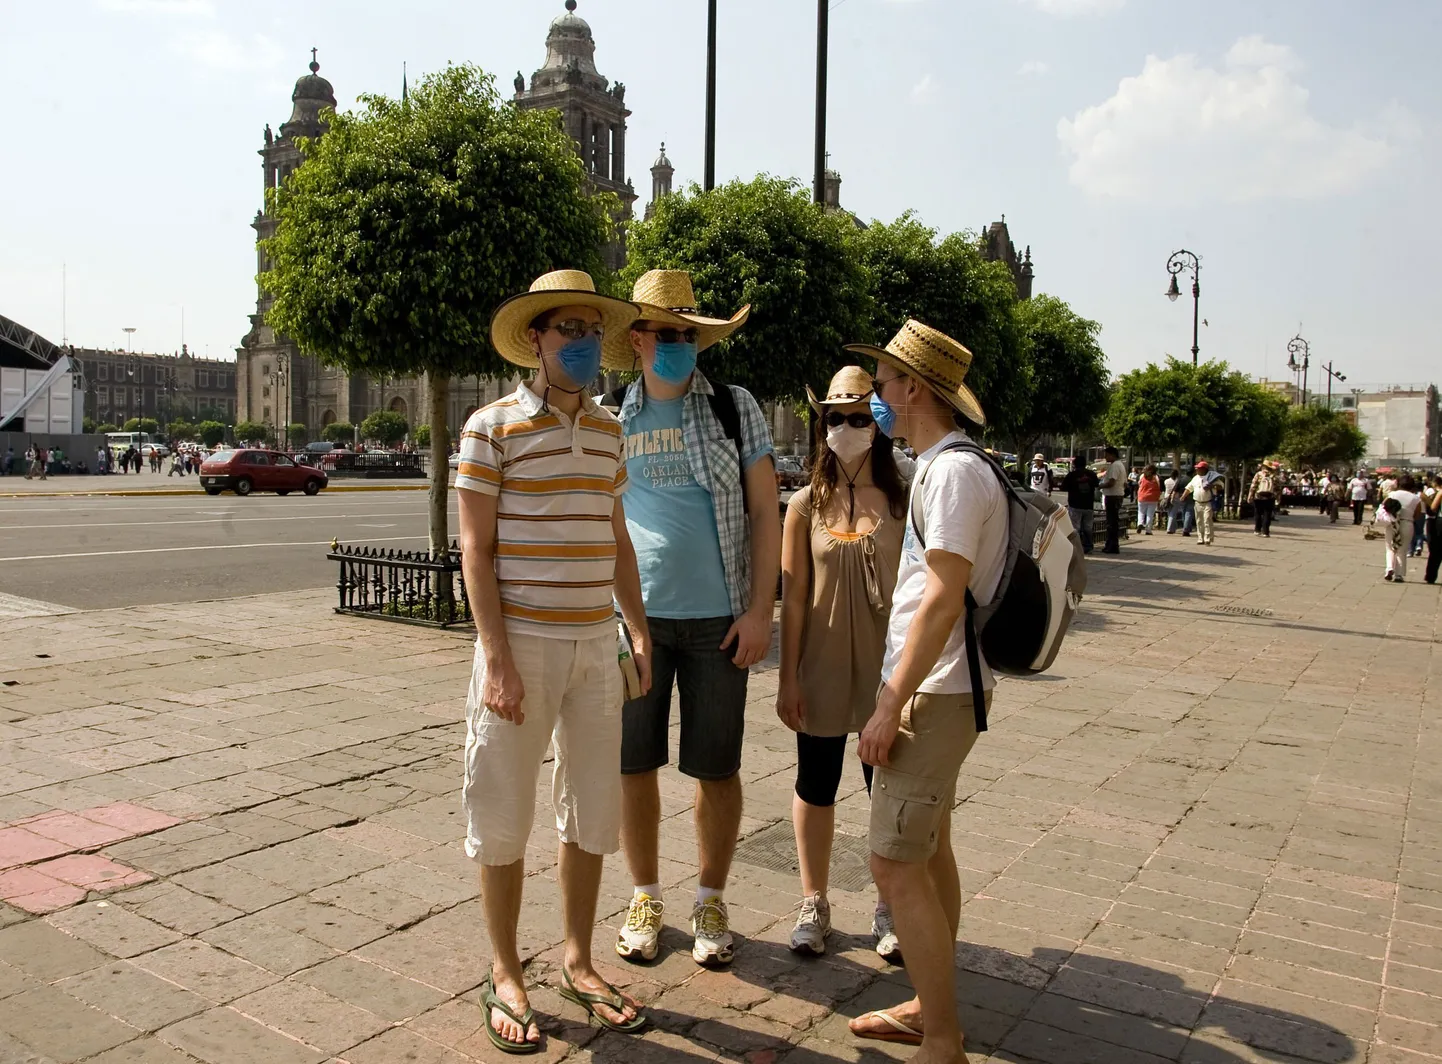 Neli näomaskides turisti eile Mexico Citys.